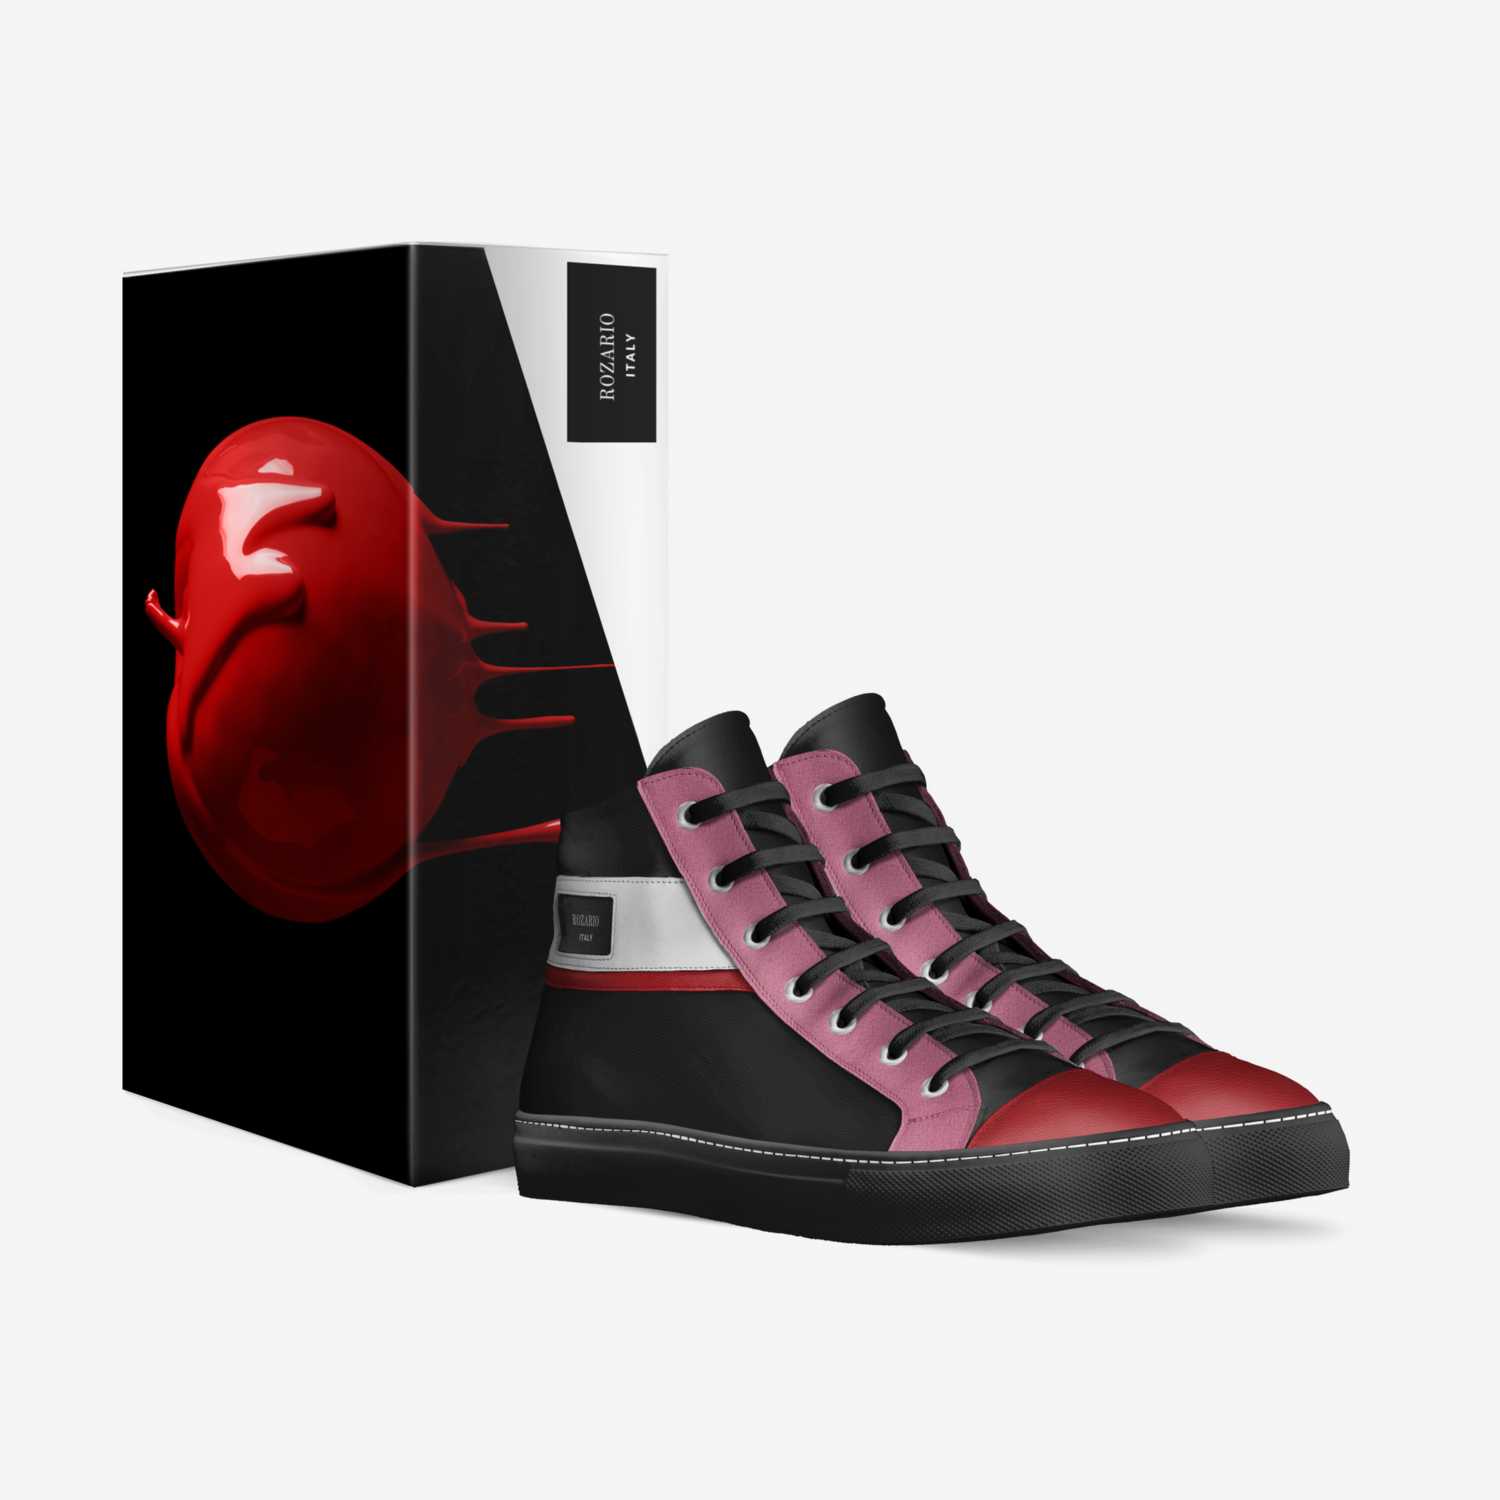 ROZARIO  custom made in Italy shoes by Nicholas Rozario | Box view